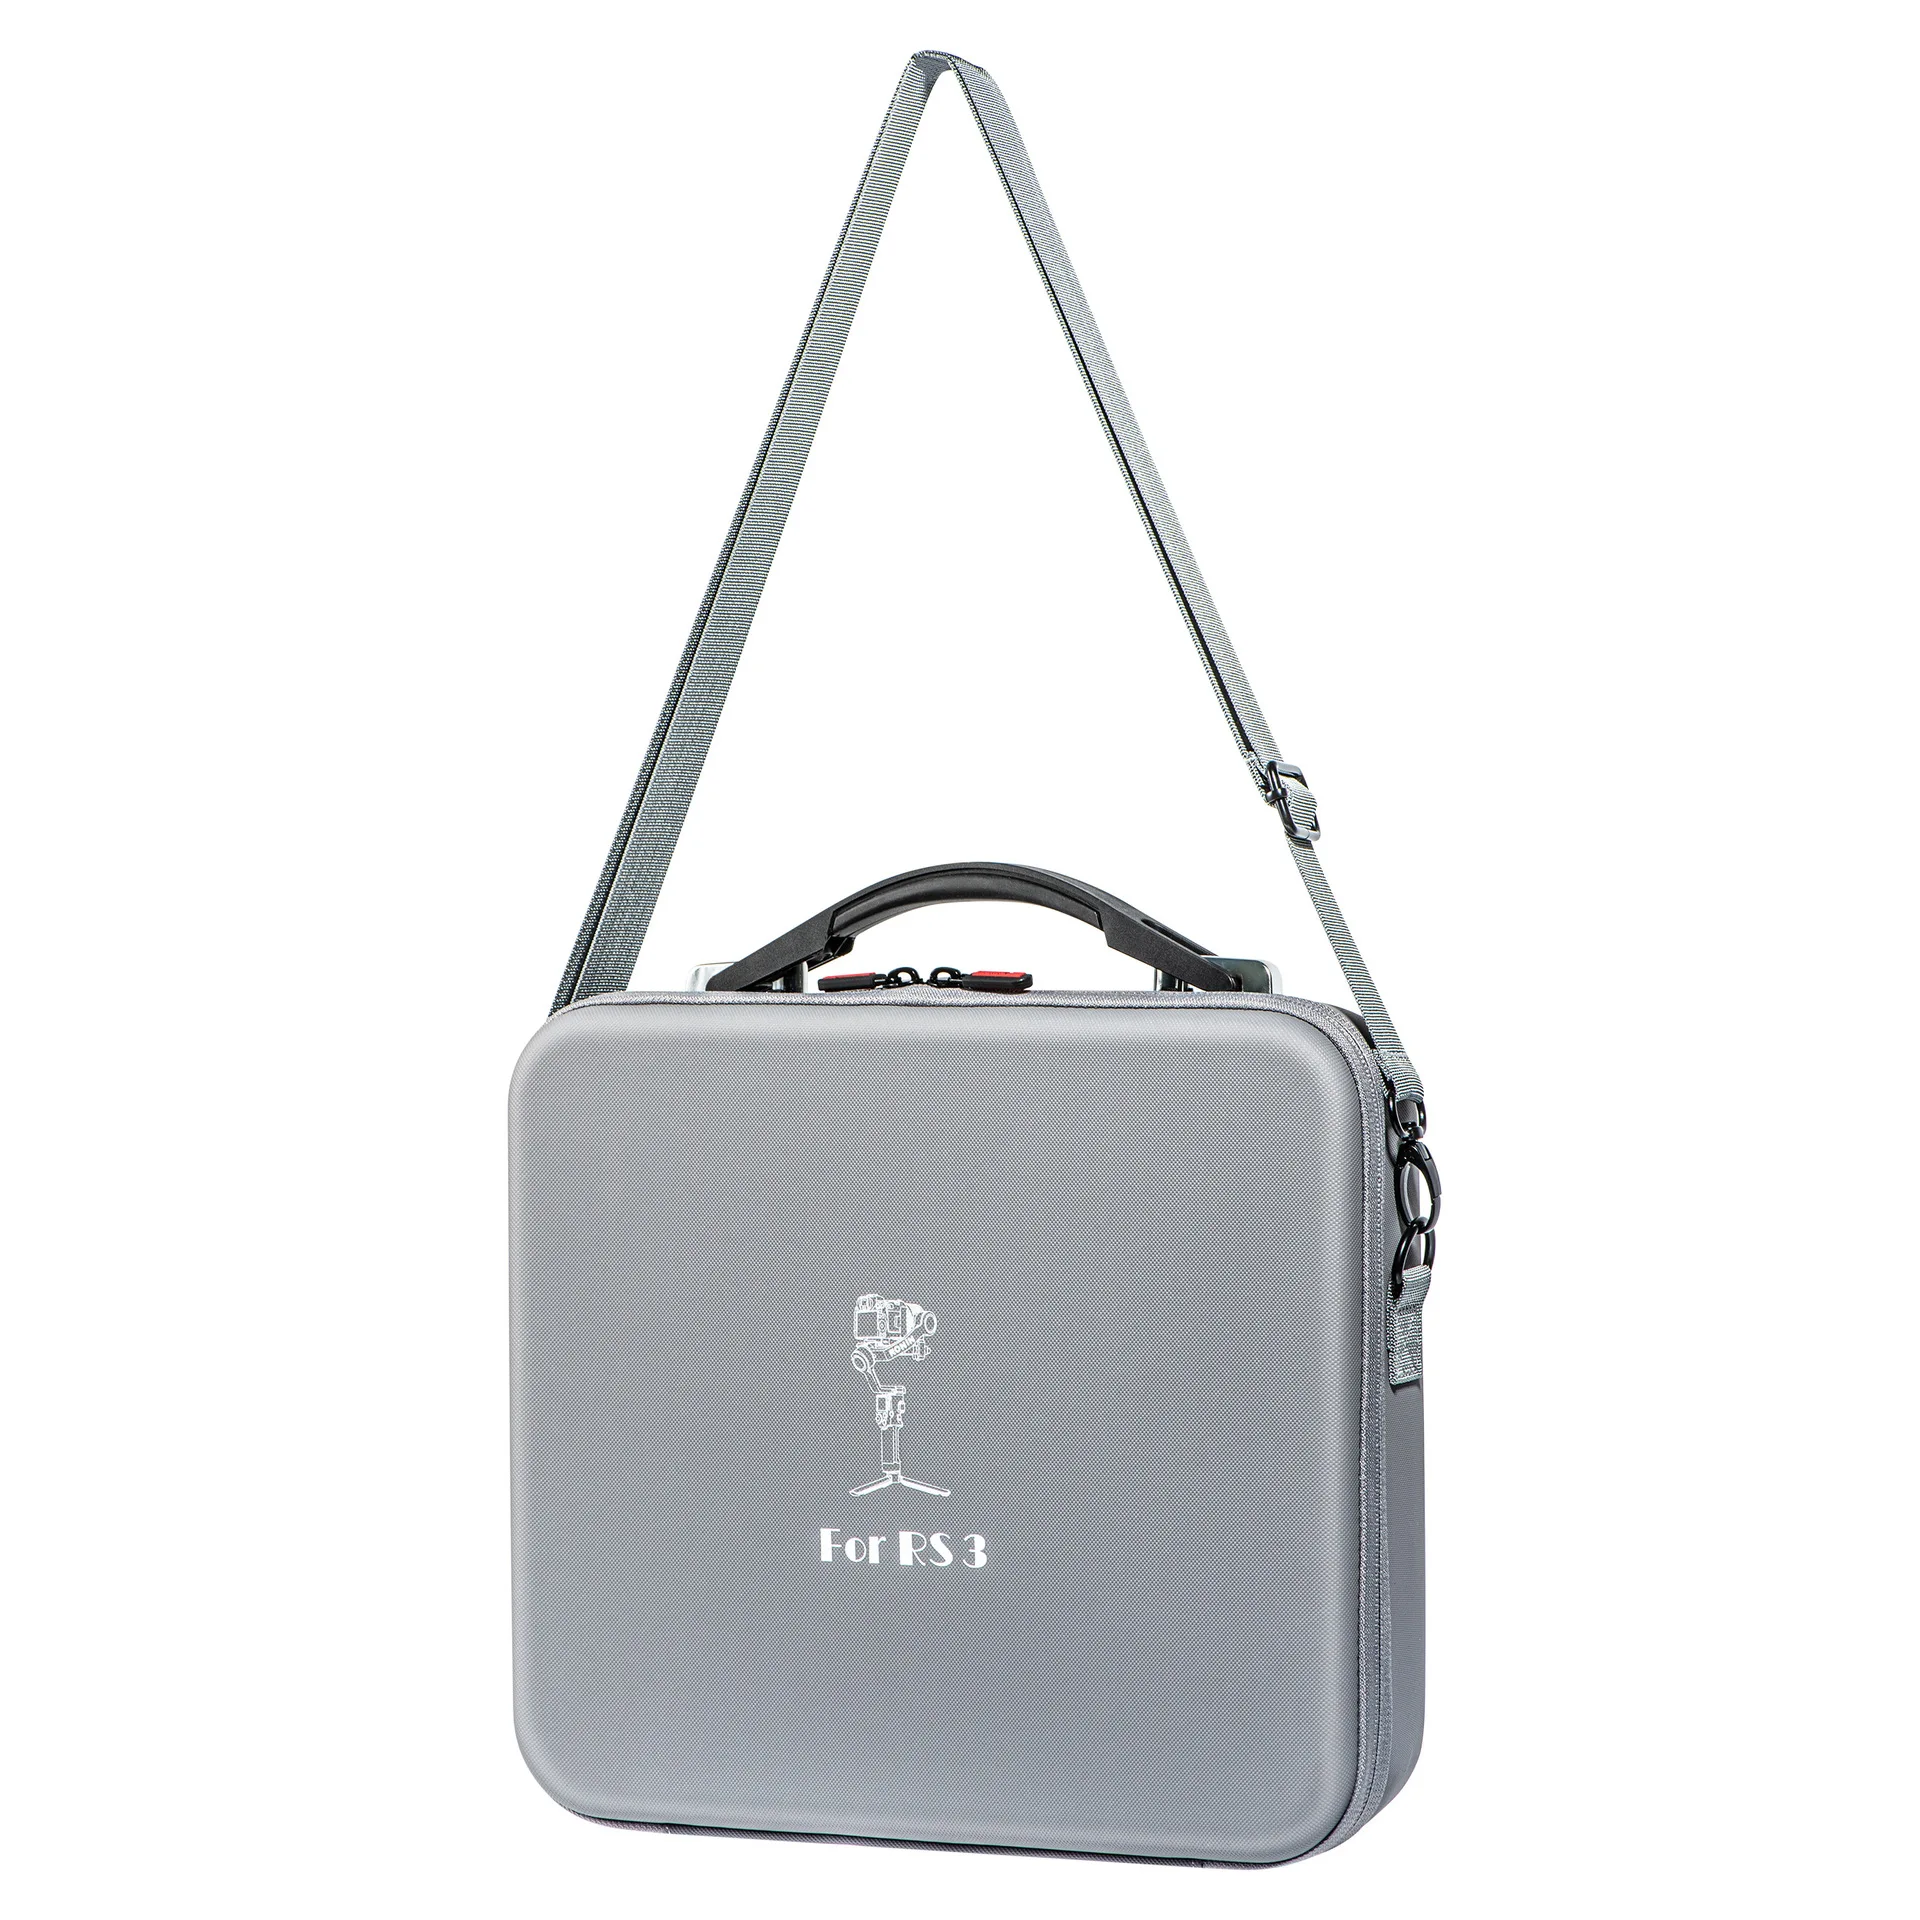 

DJI RS 3 Shoulder Bag PU Waterproof Carrying Case for DJI Ronin 3 Handheld Stabilizers Accessories Storage Bag Handbag